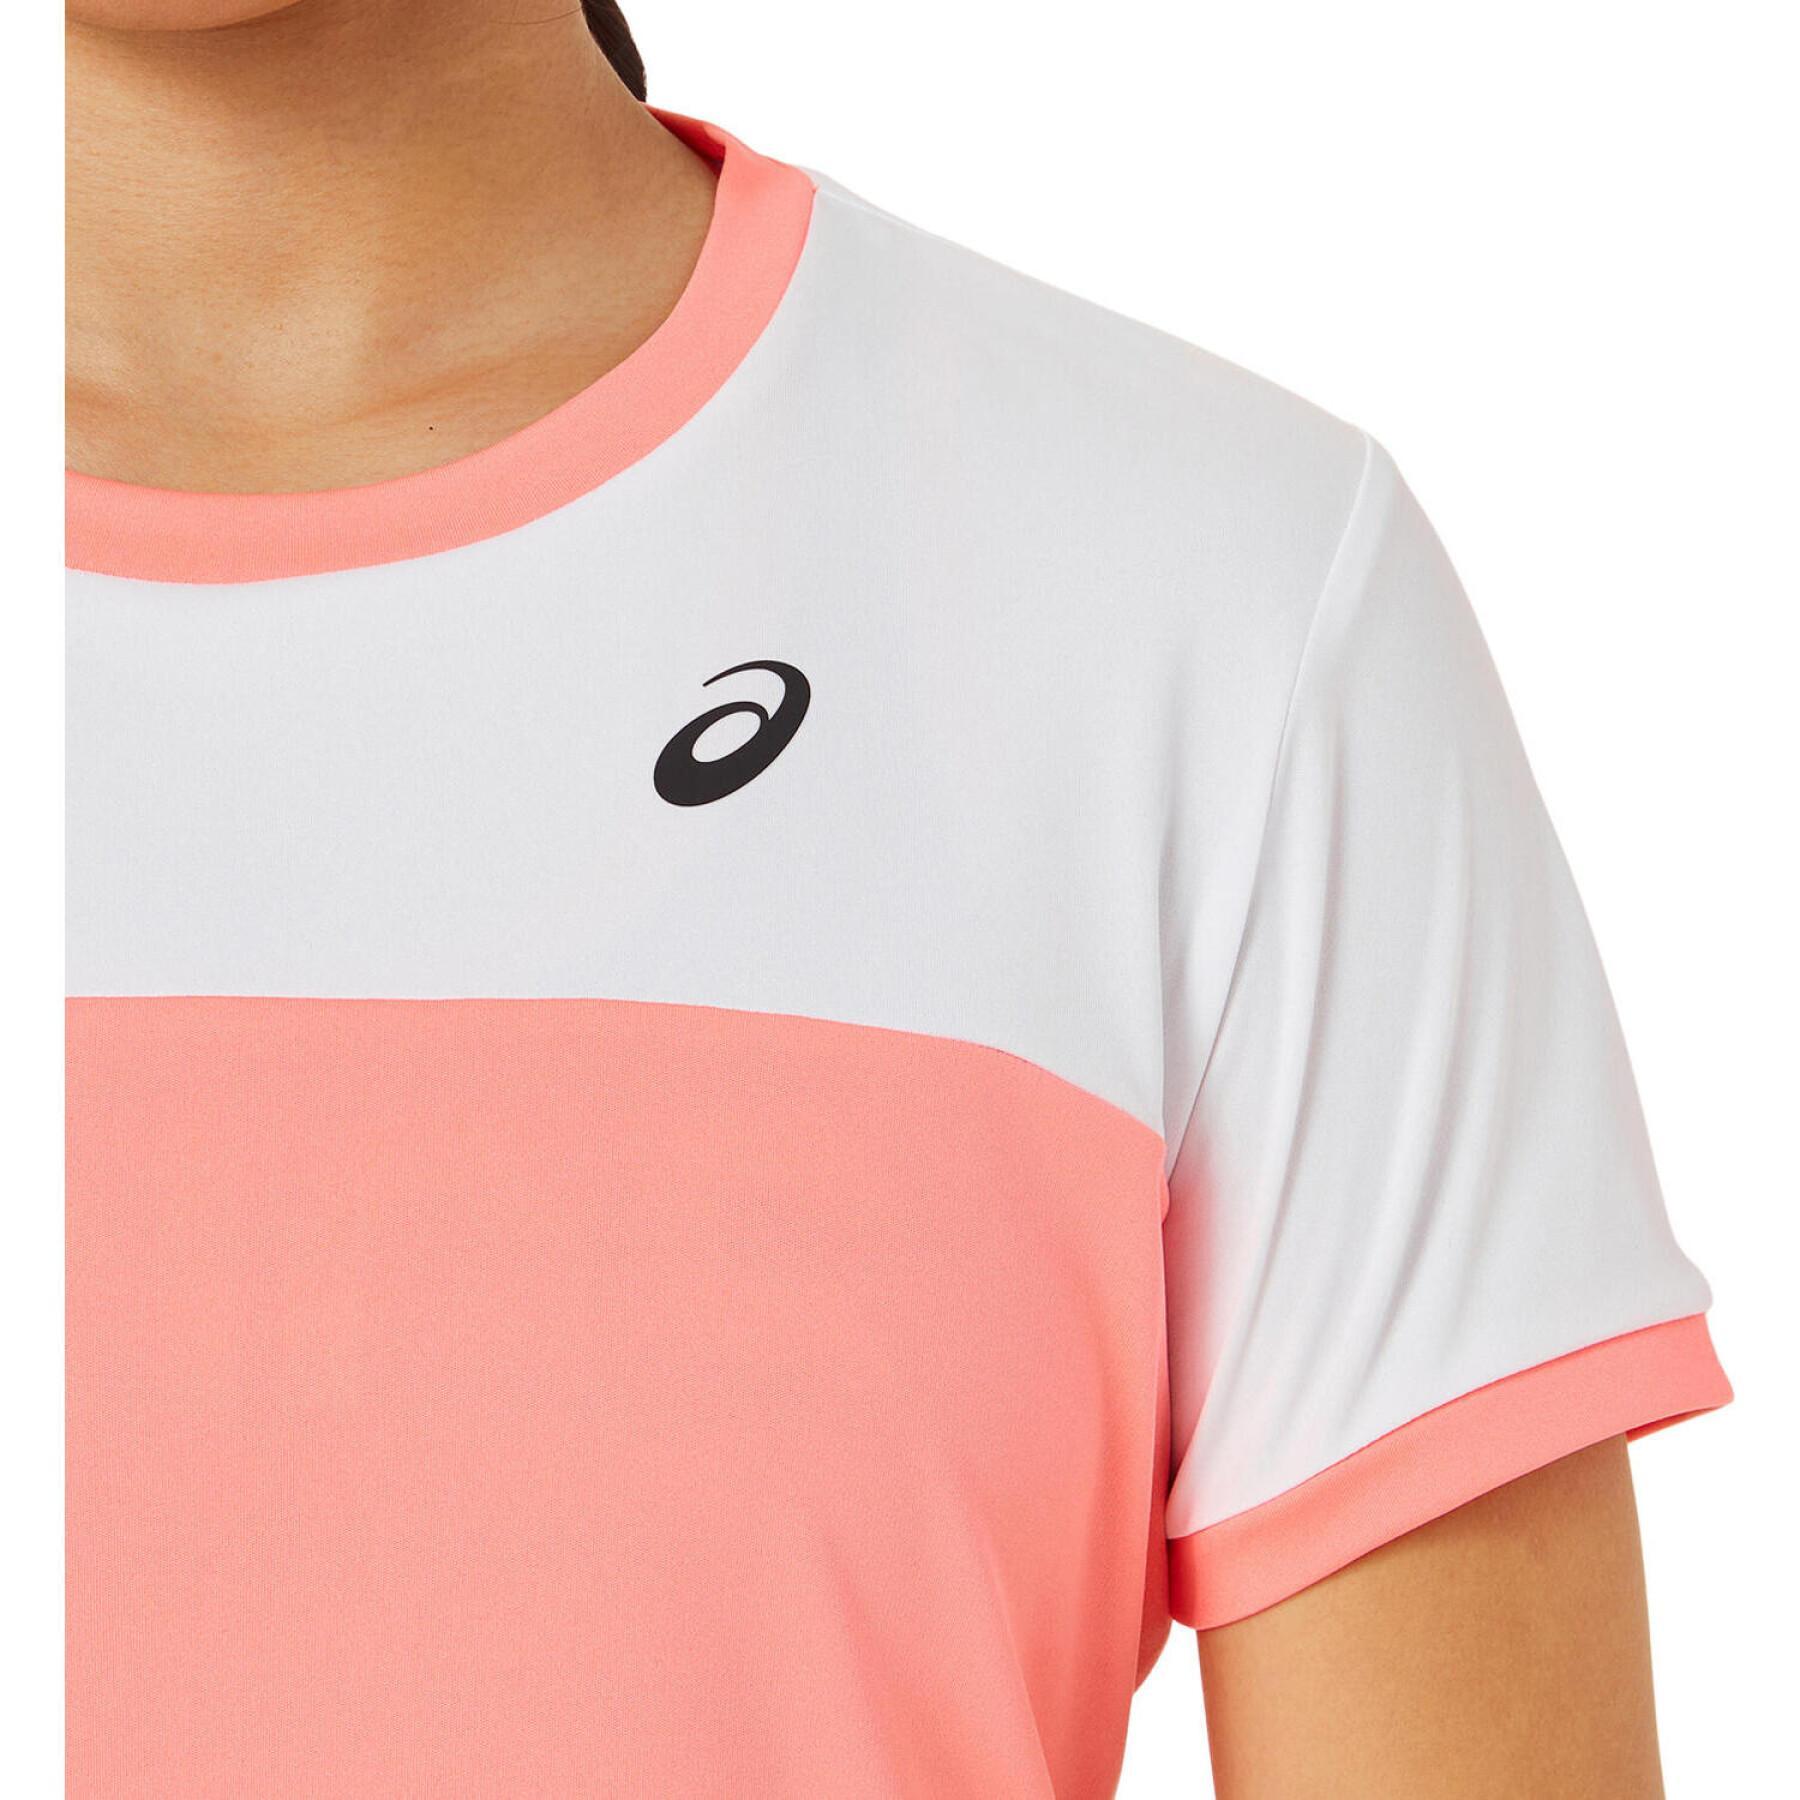 Camiseta de tenis para niña Asics